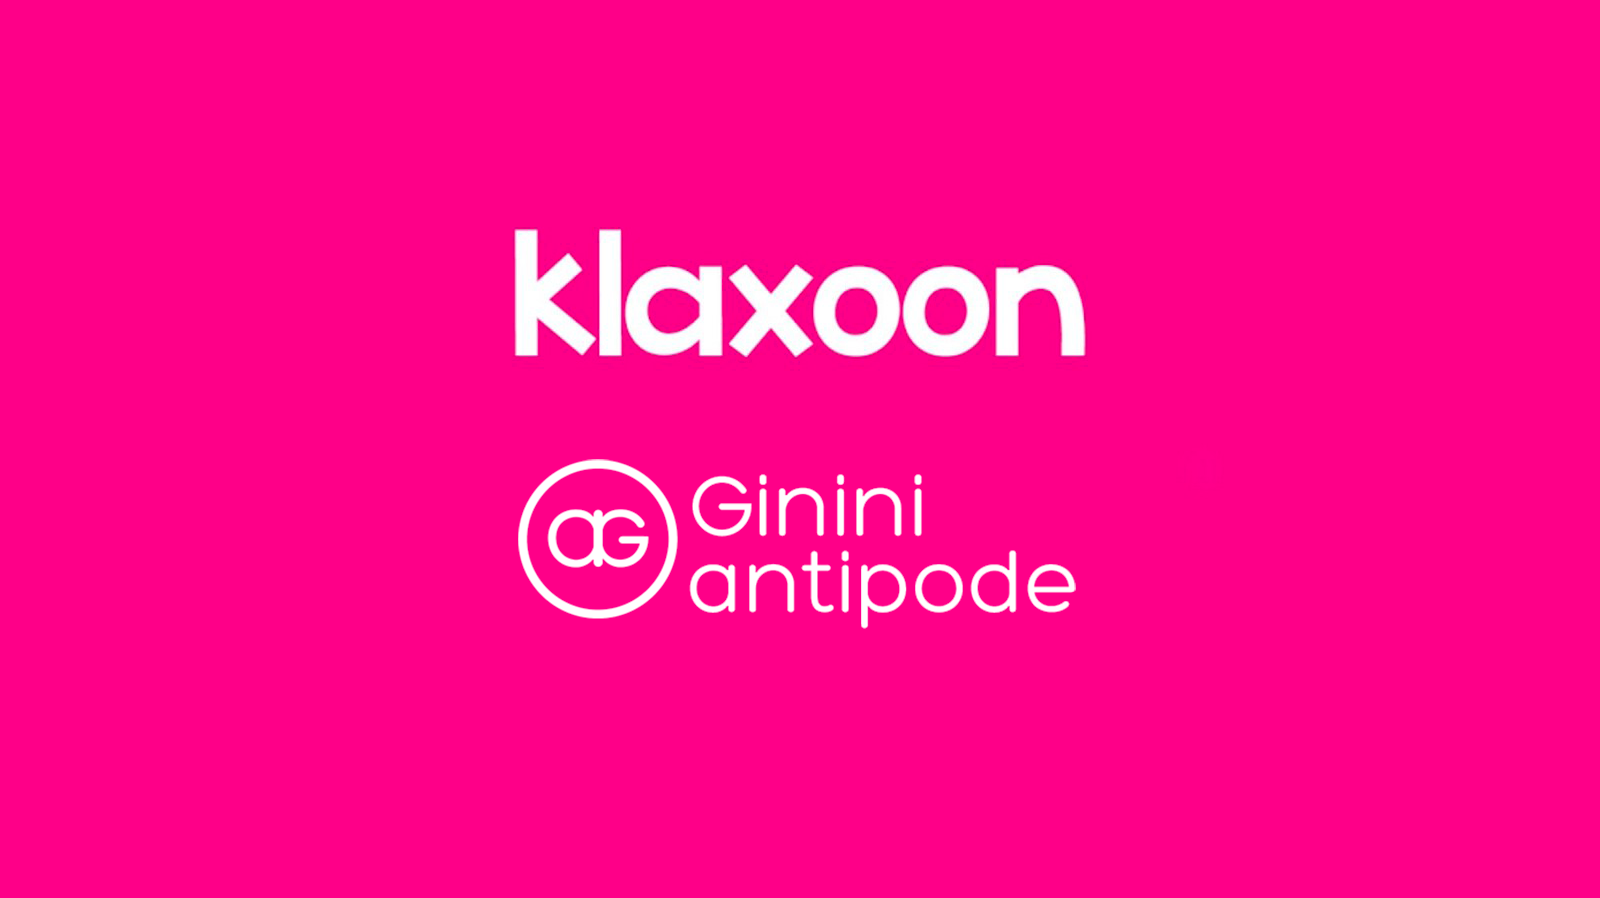 Ginini antipode booste ses ateliers avec Klaxoon